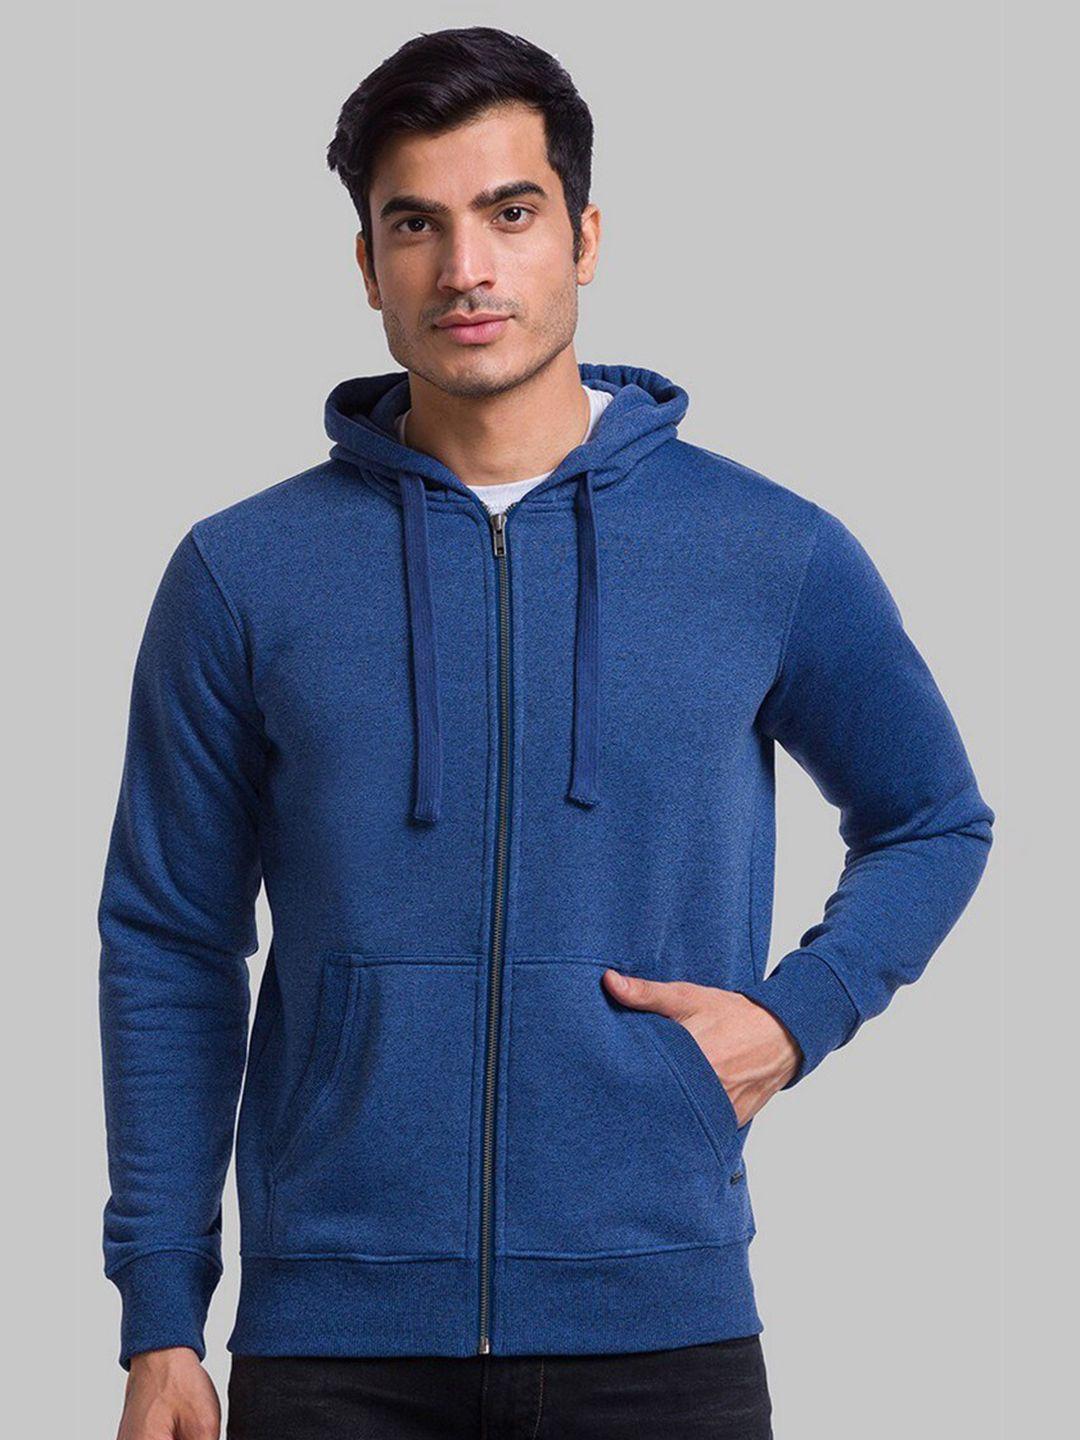 parx-men-blue-hooded-sweatshirt